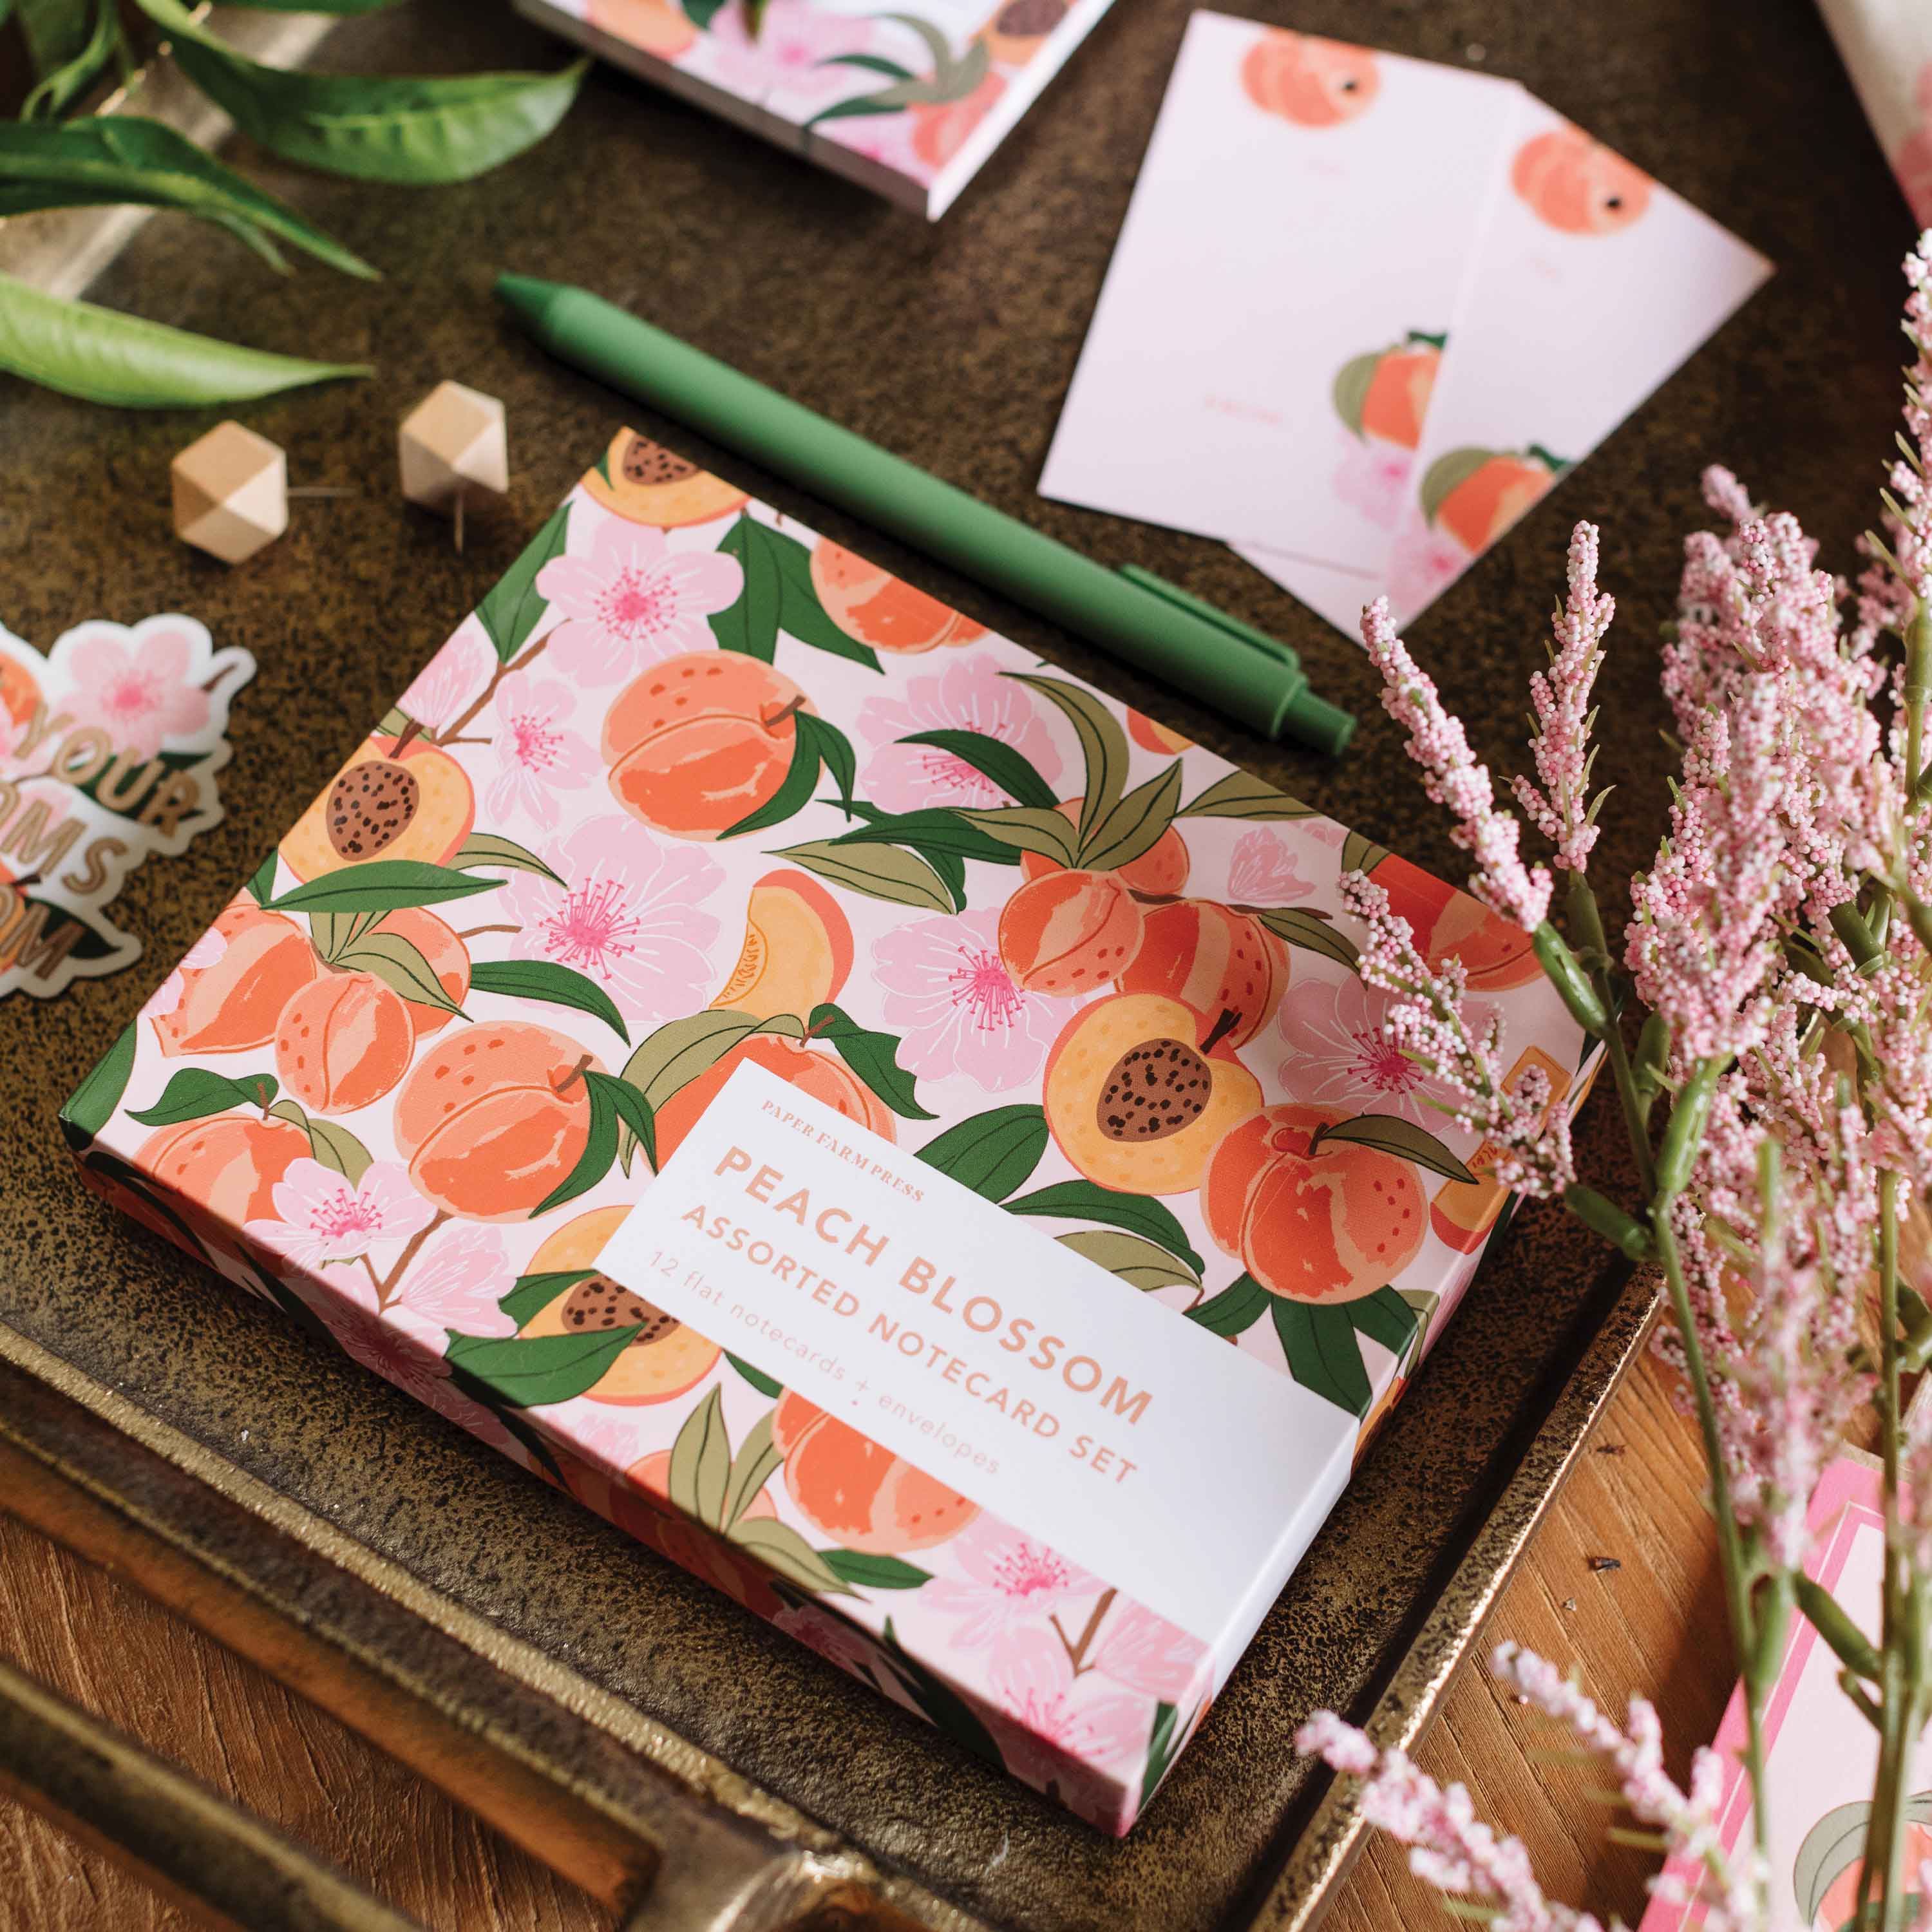 Peach Blossom Assorted Notecard Set, Pen Pal Greeting Cards